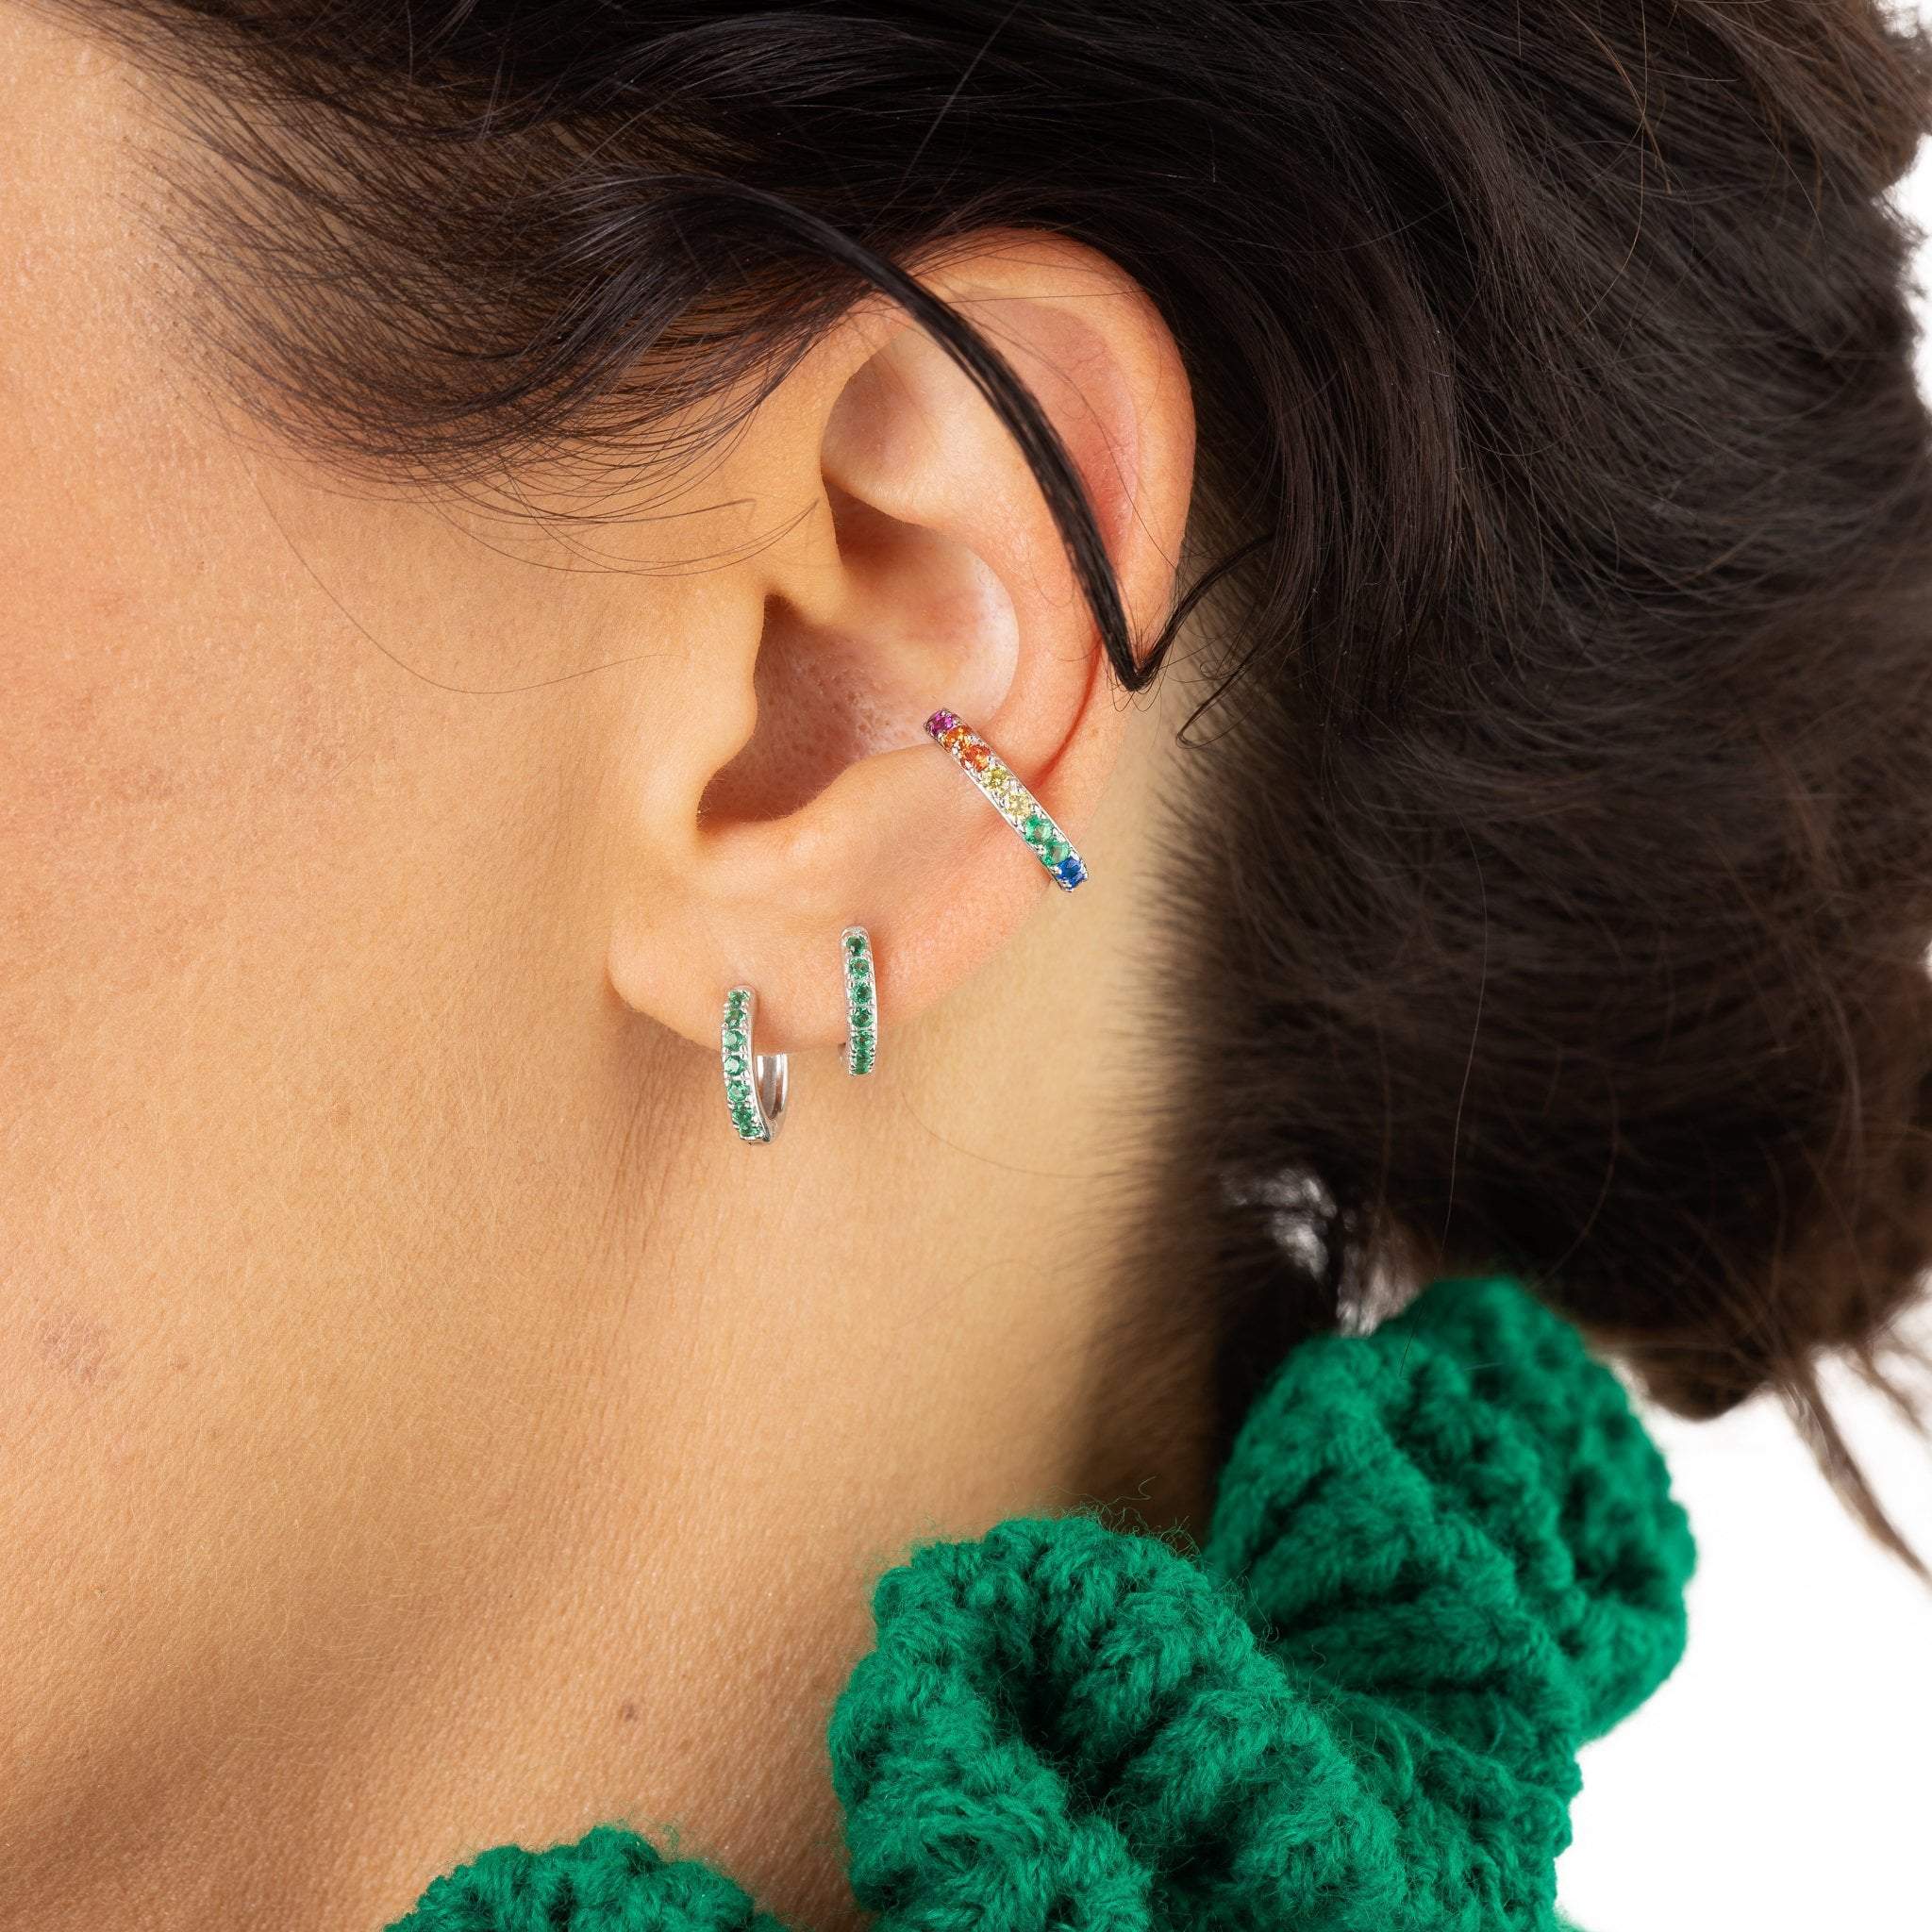  Huggie Earrings with Green Stones - by Scream Pretty